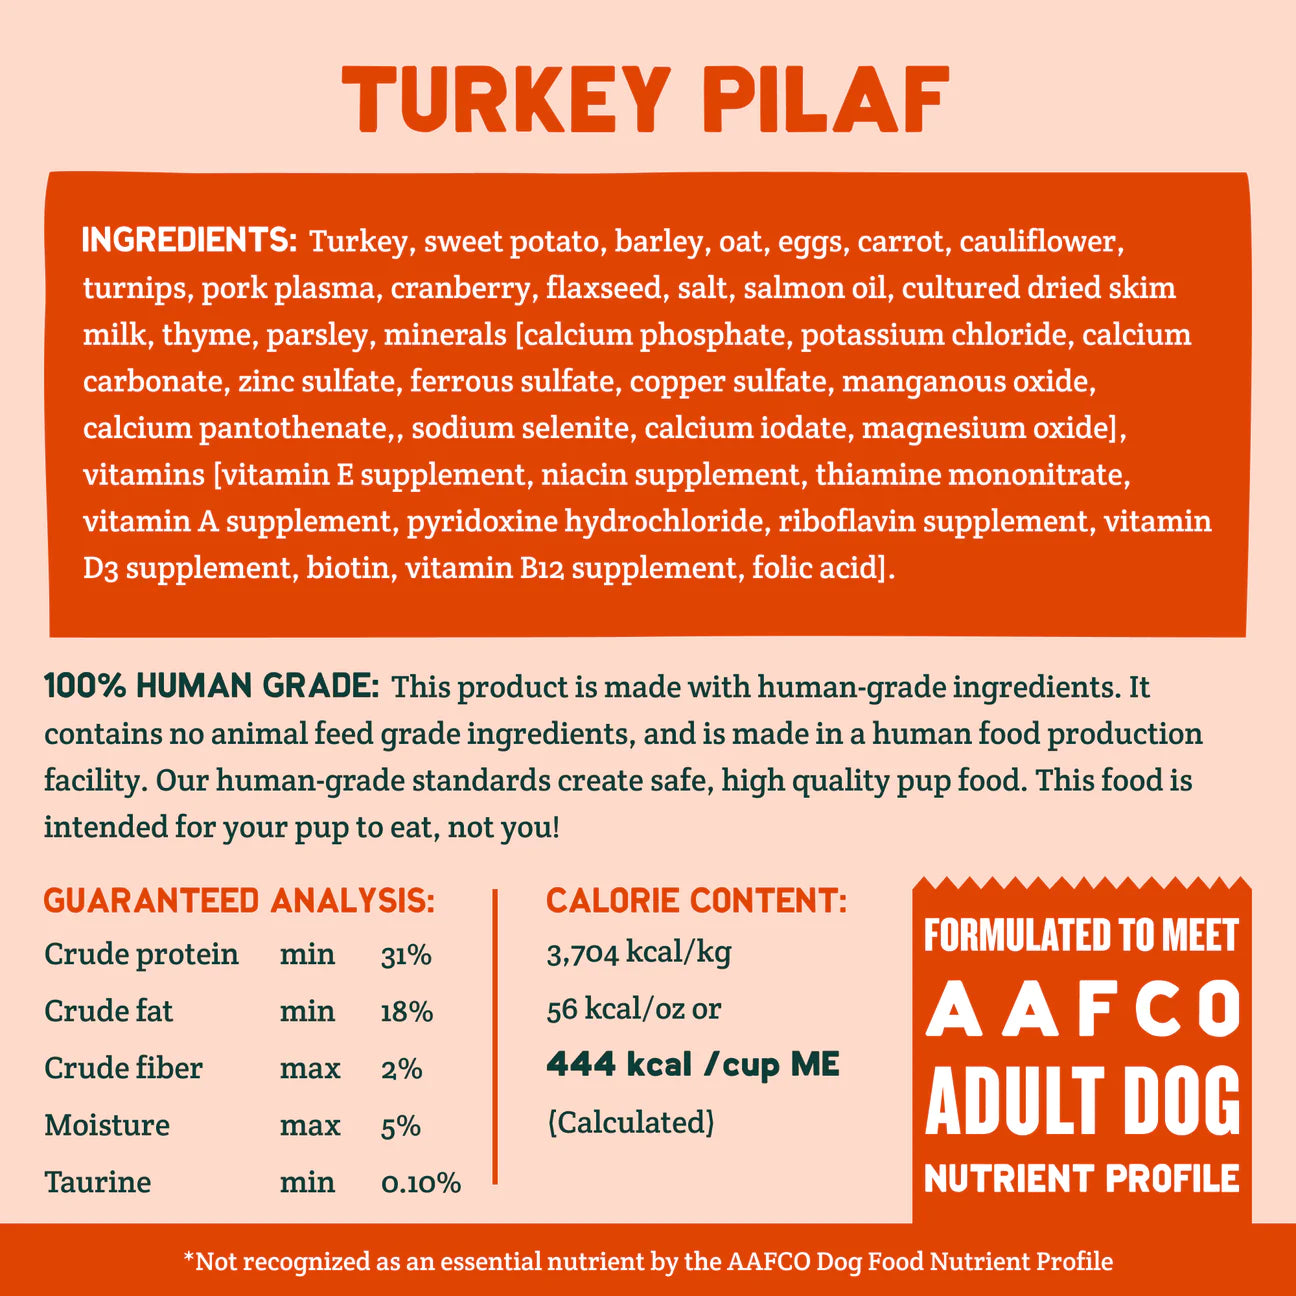 A Pup Above Cubies - Grain Friendly Turkey Pilaf